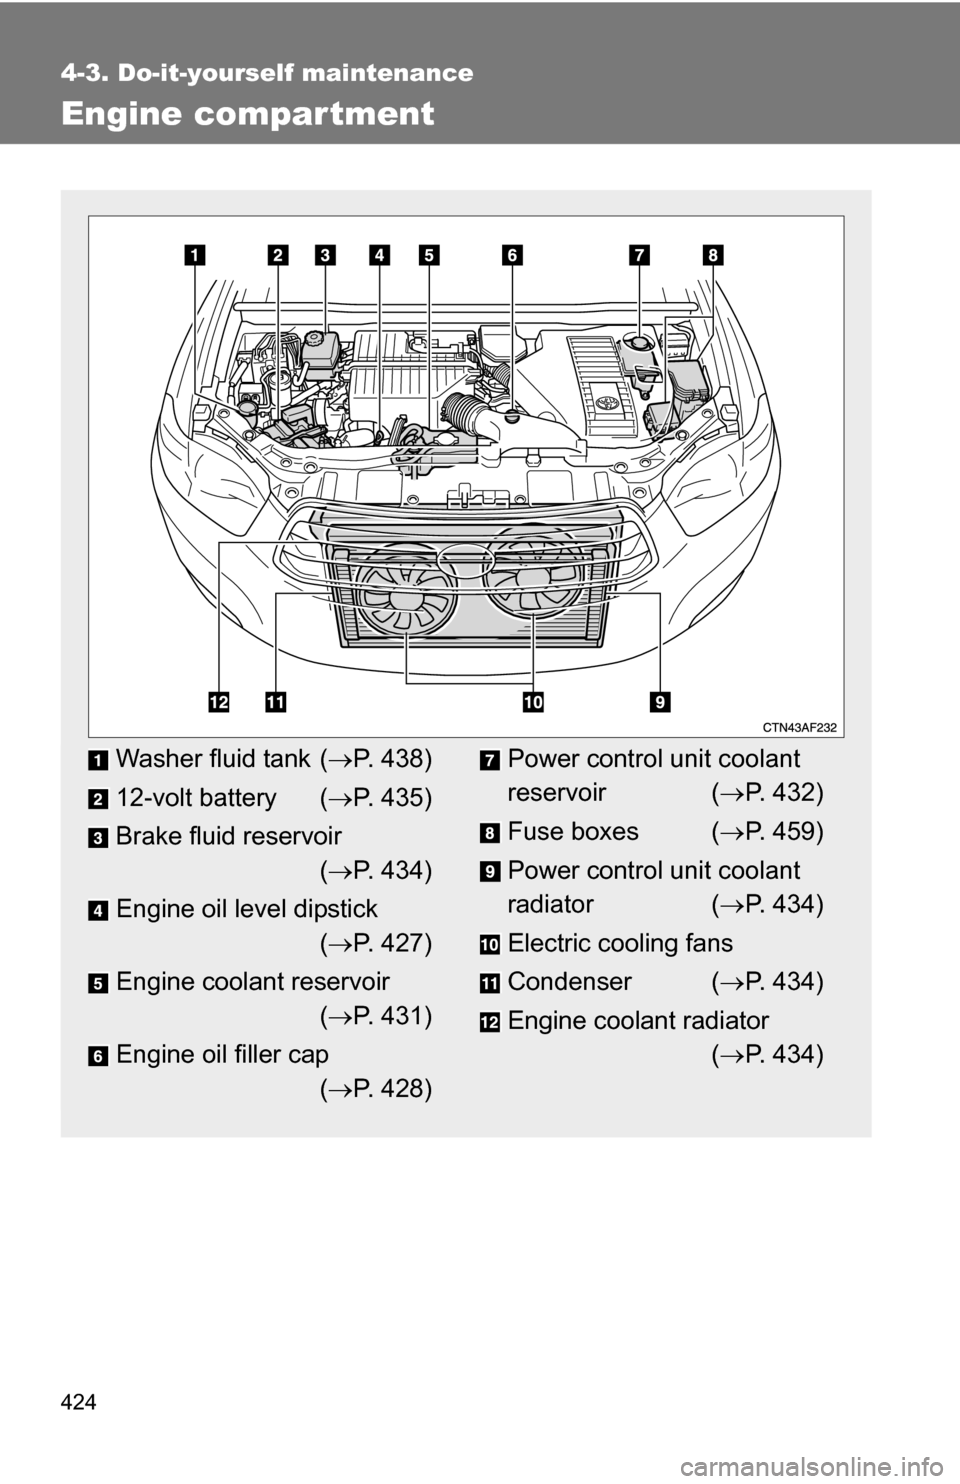 TOYOTA HIGHLANDER HYBRID 2008 XU40 / 2.G Owners Manual 424
4-3. Do-it-yourself maintenance
Engine compar tment
Washer fluid tank (P. 438)
12-volt battery ( P. 435)
Brake fluid reservoir ( P. 434)
Engine oil level dipstick ( P. 427)
Engine cool